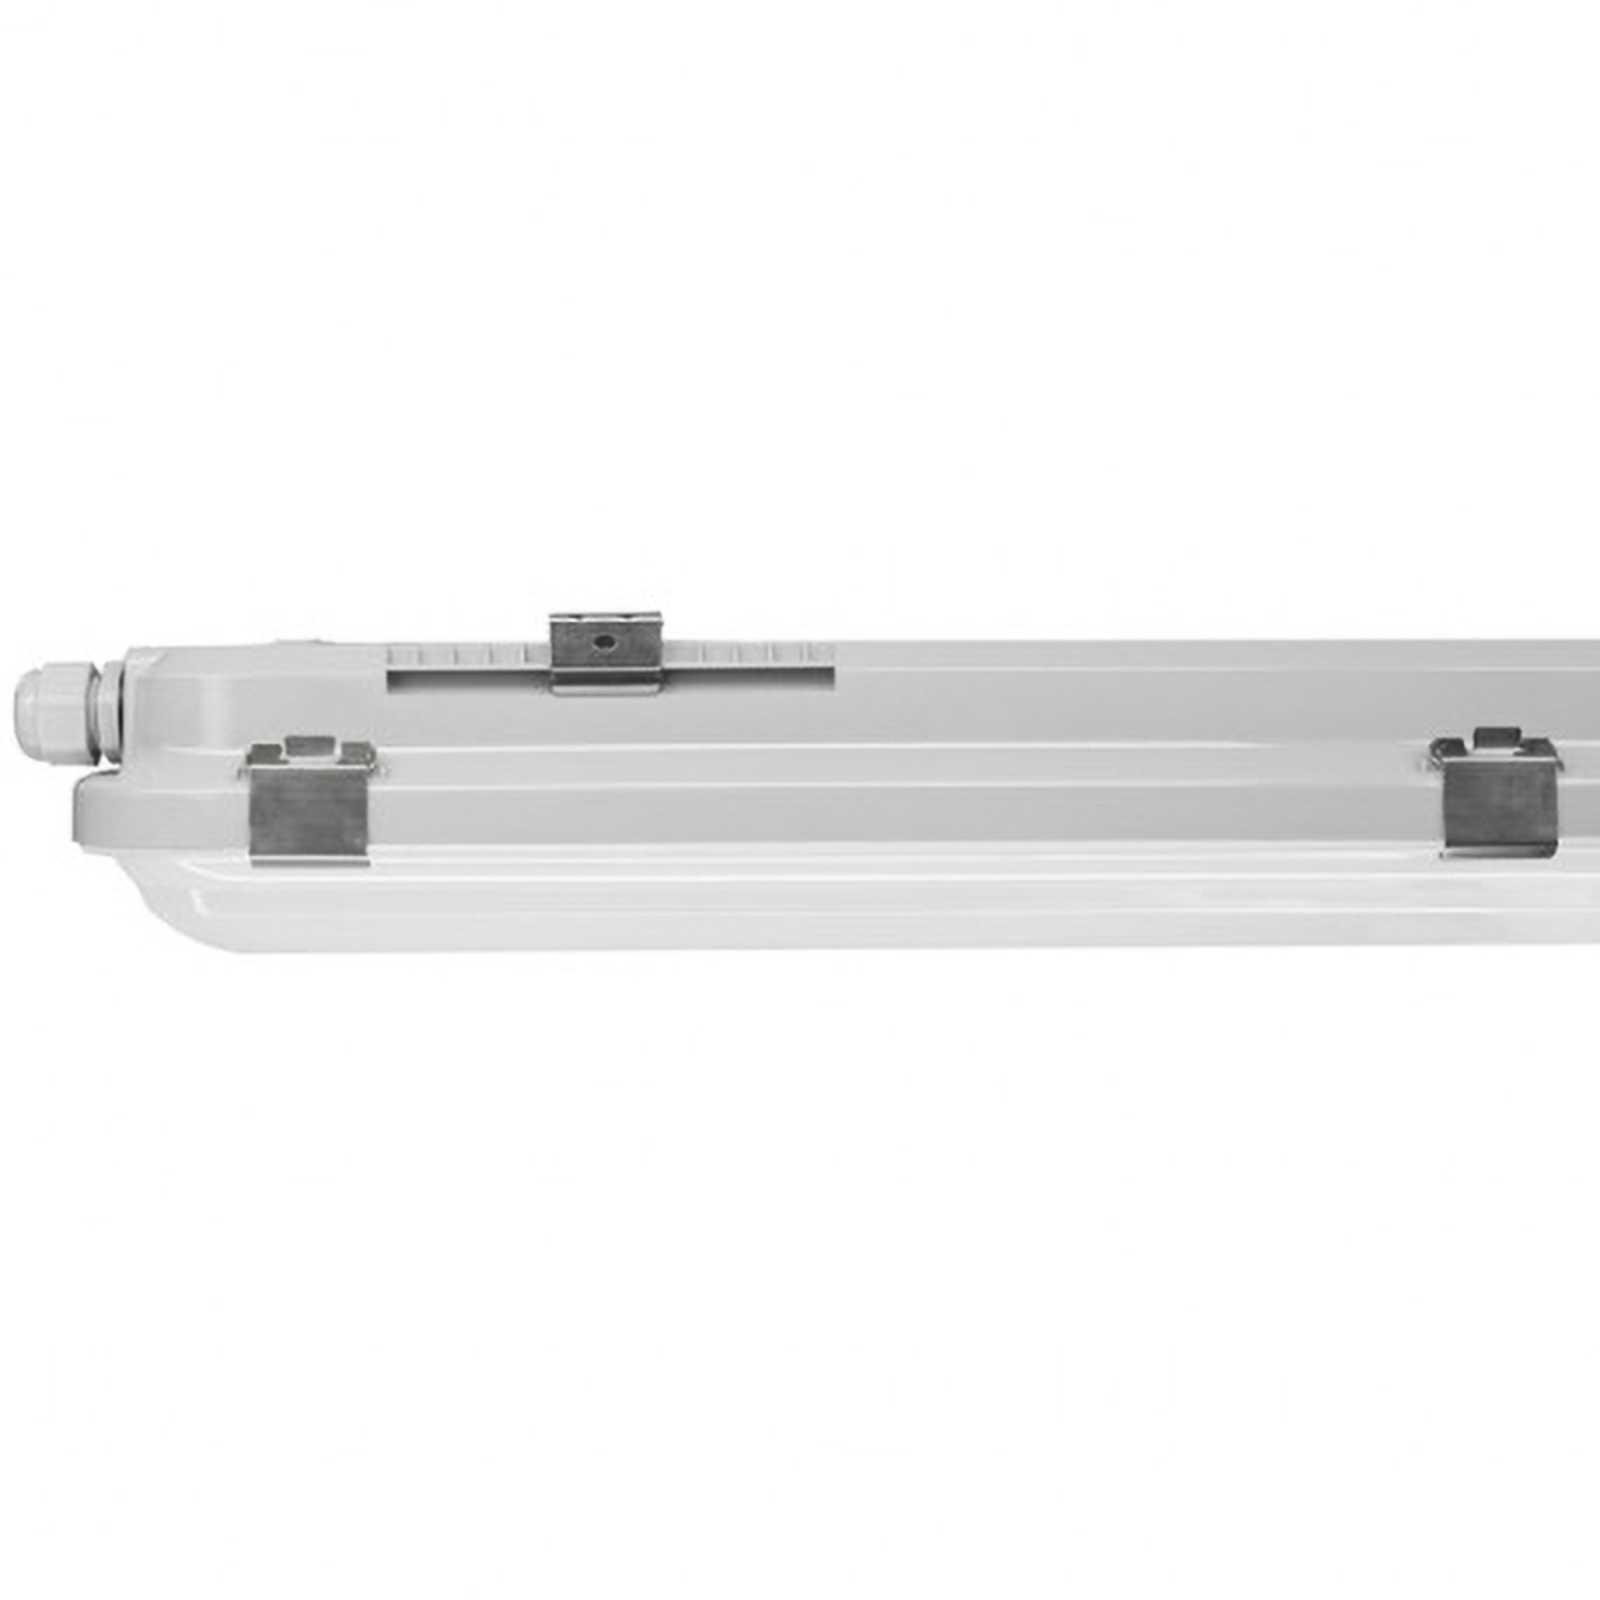 InnoGreen AQUOS 3.0 BASELine LED-belysning 122cm 850